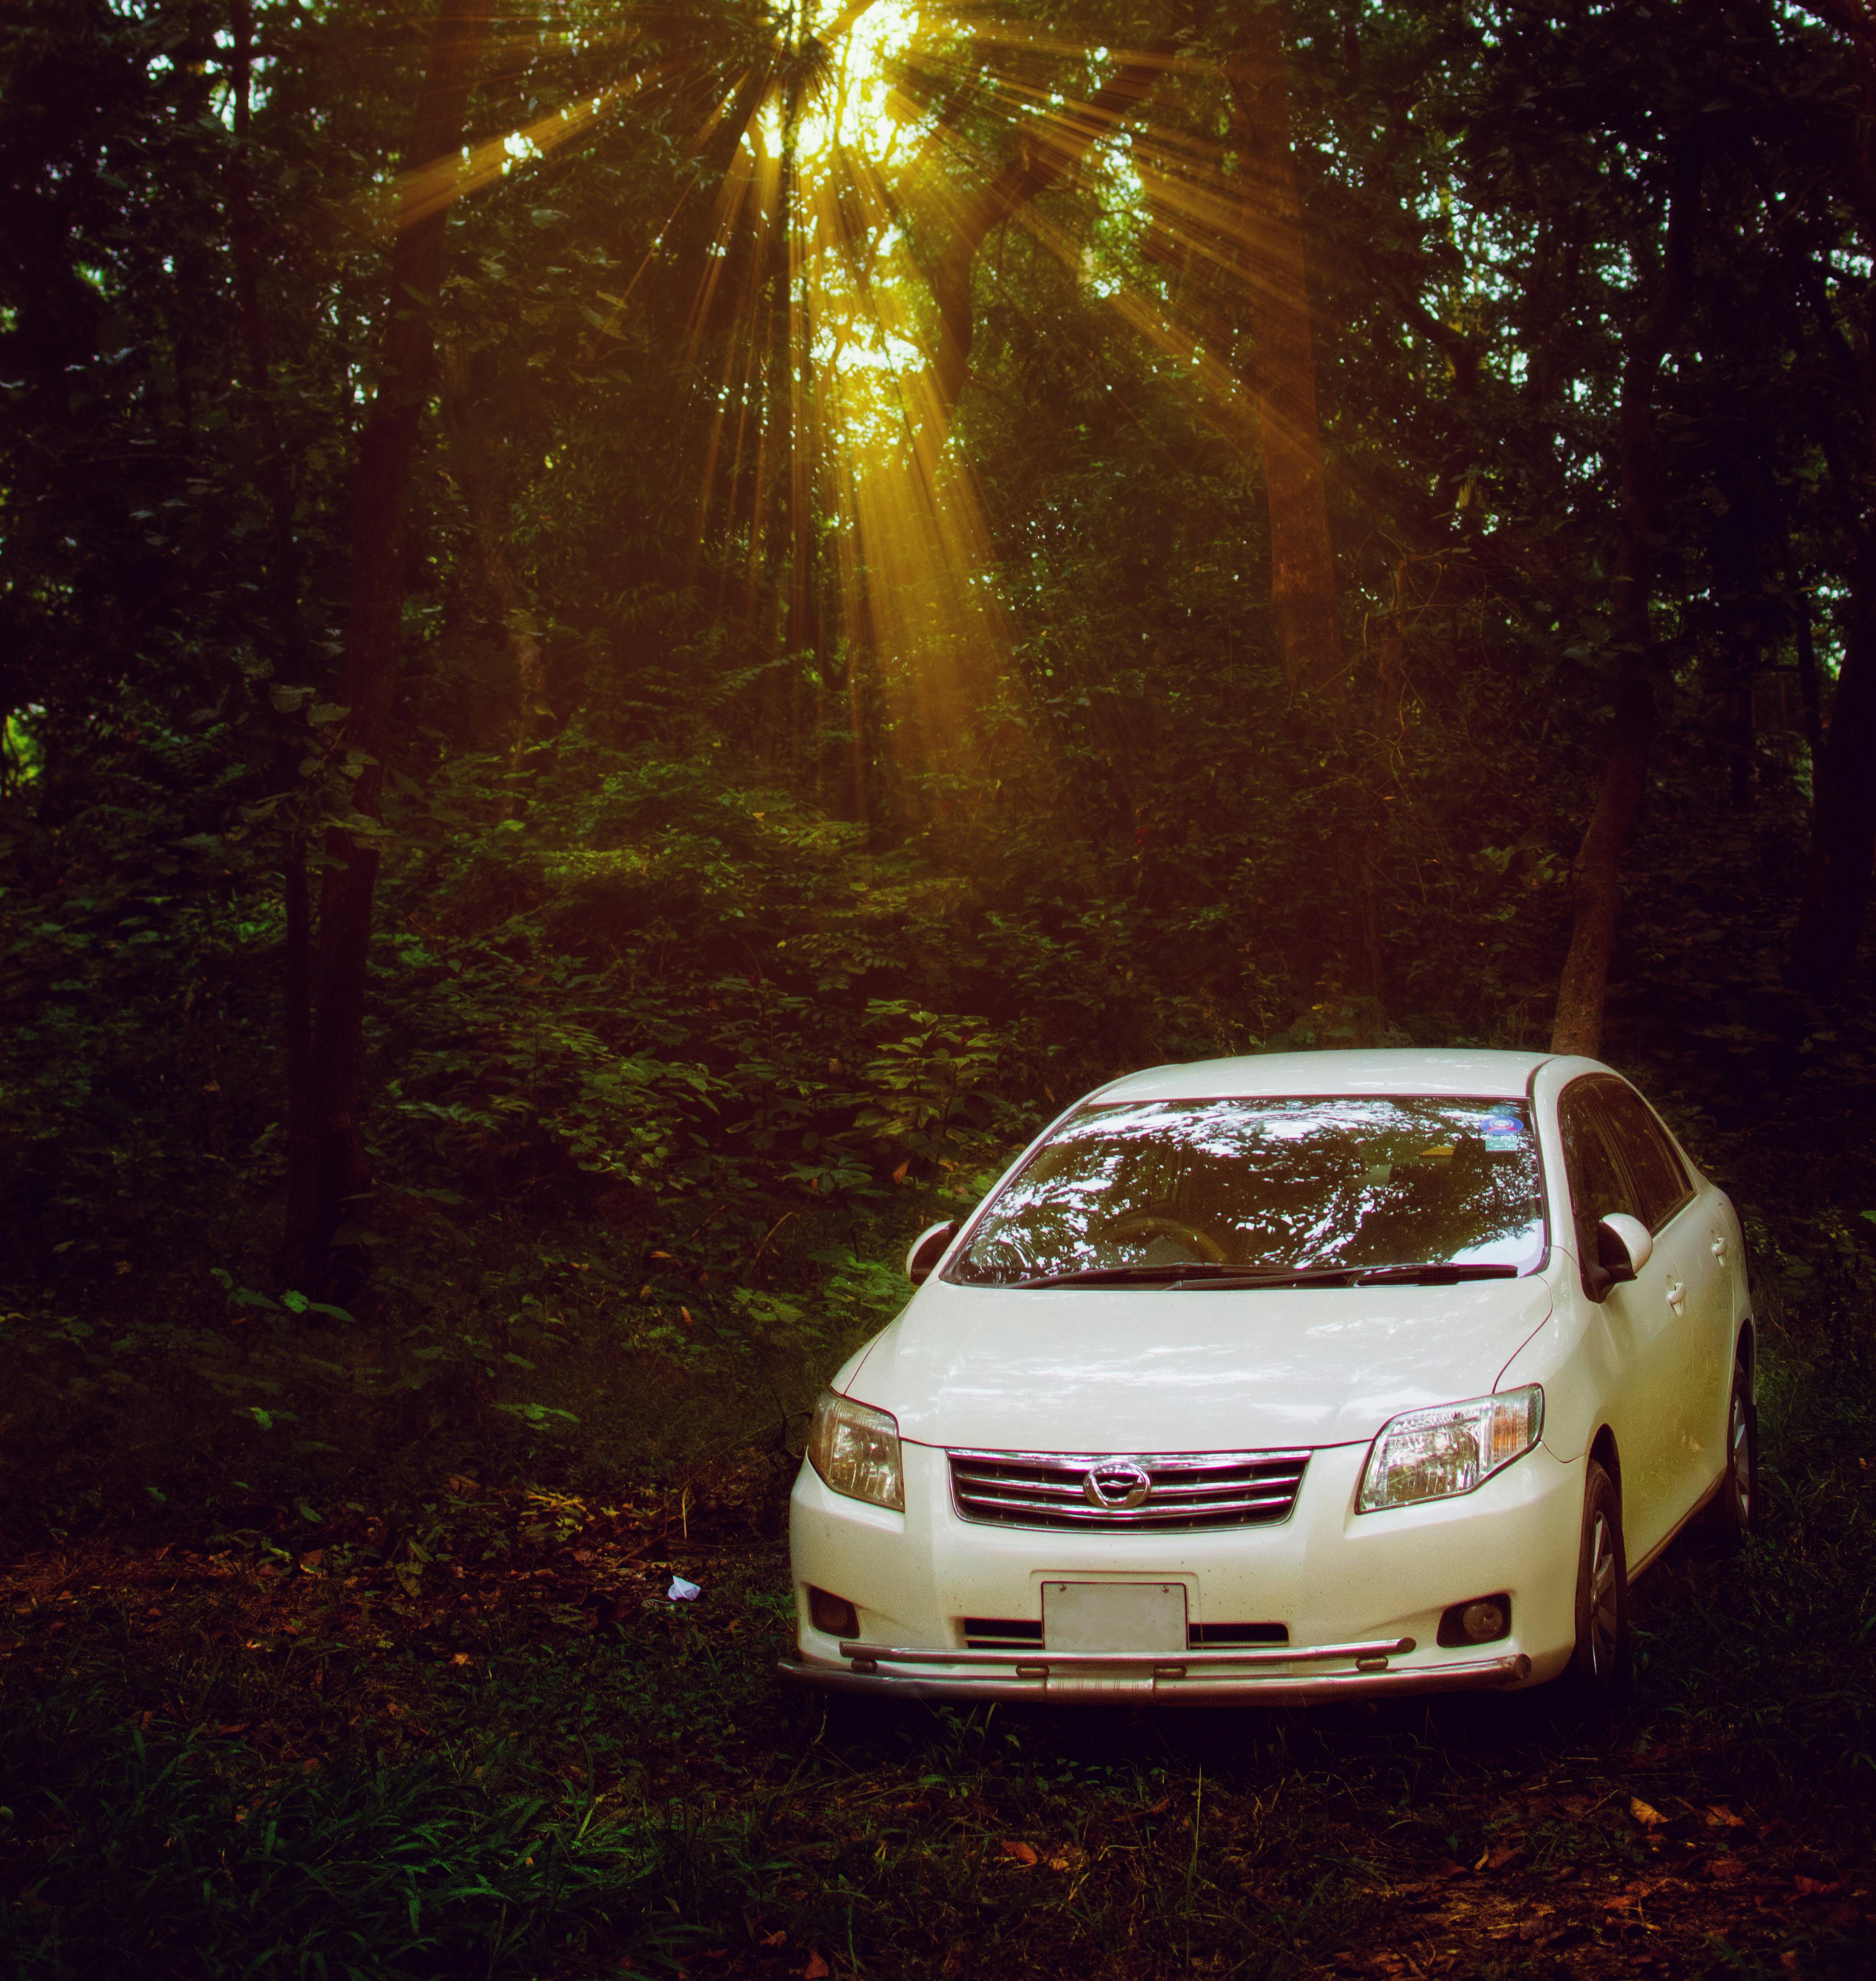 Free stock photo of car, car in jungle, evening sun